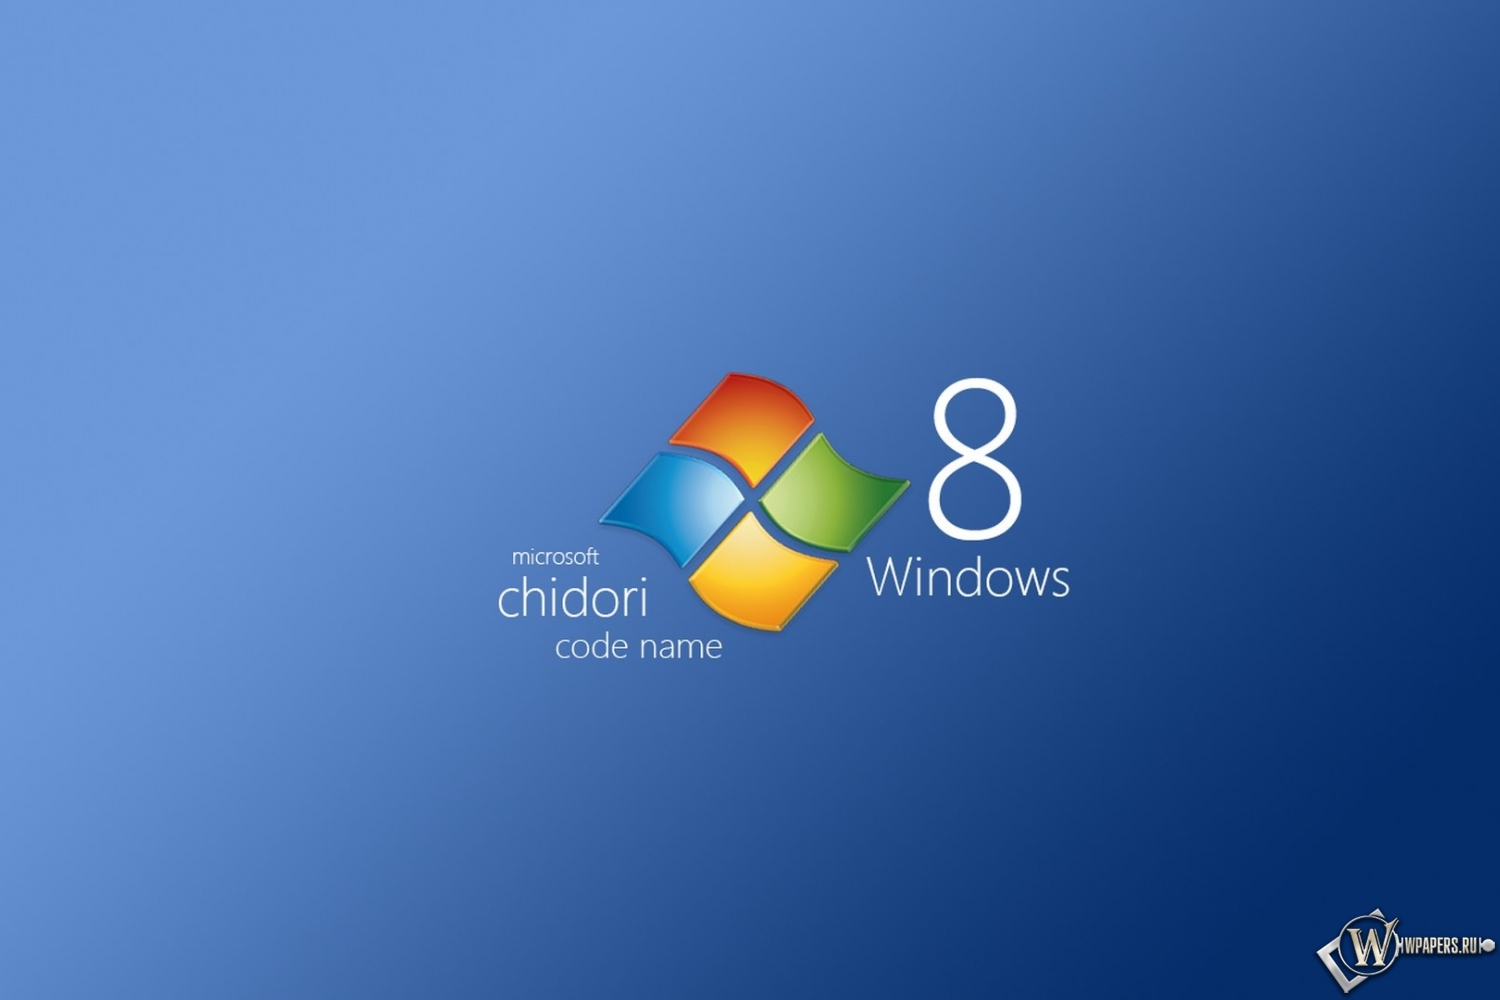 Windows 8 chidori 1500x1000